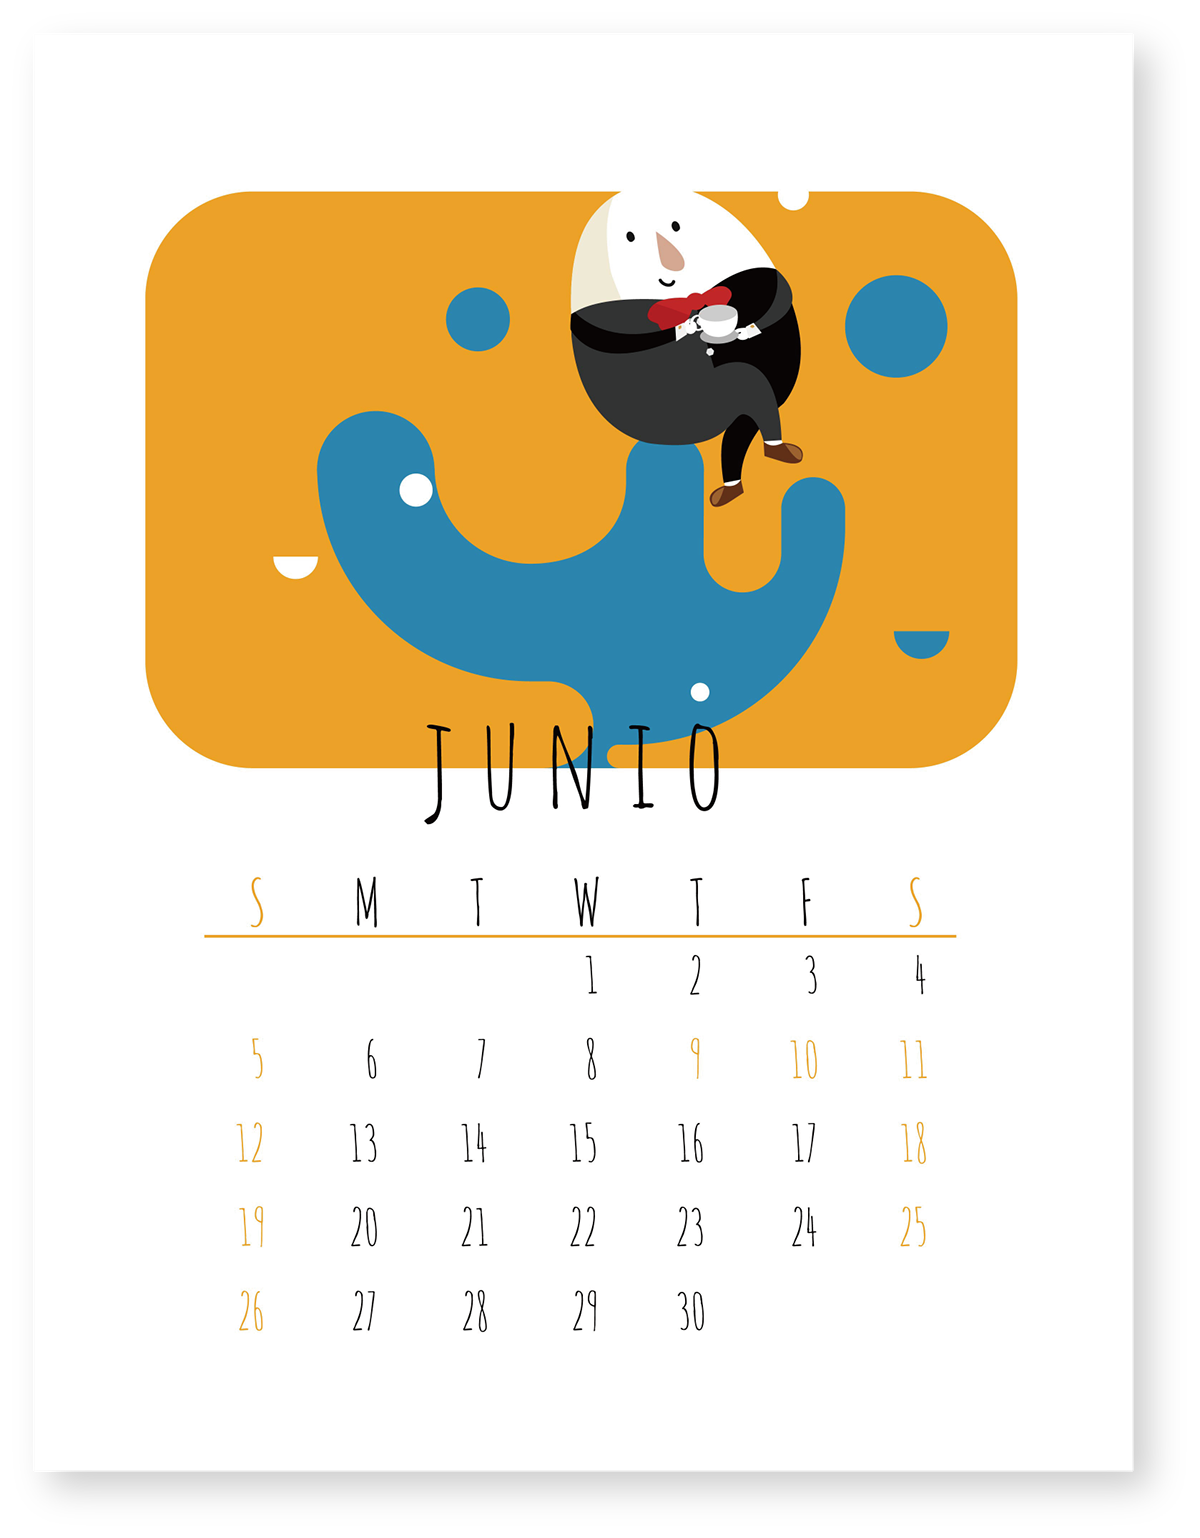 calendar calendario fiestas festivals